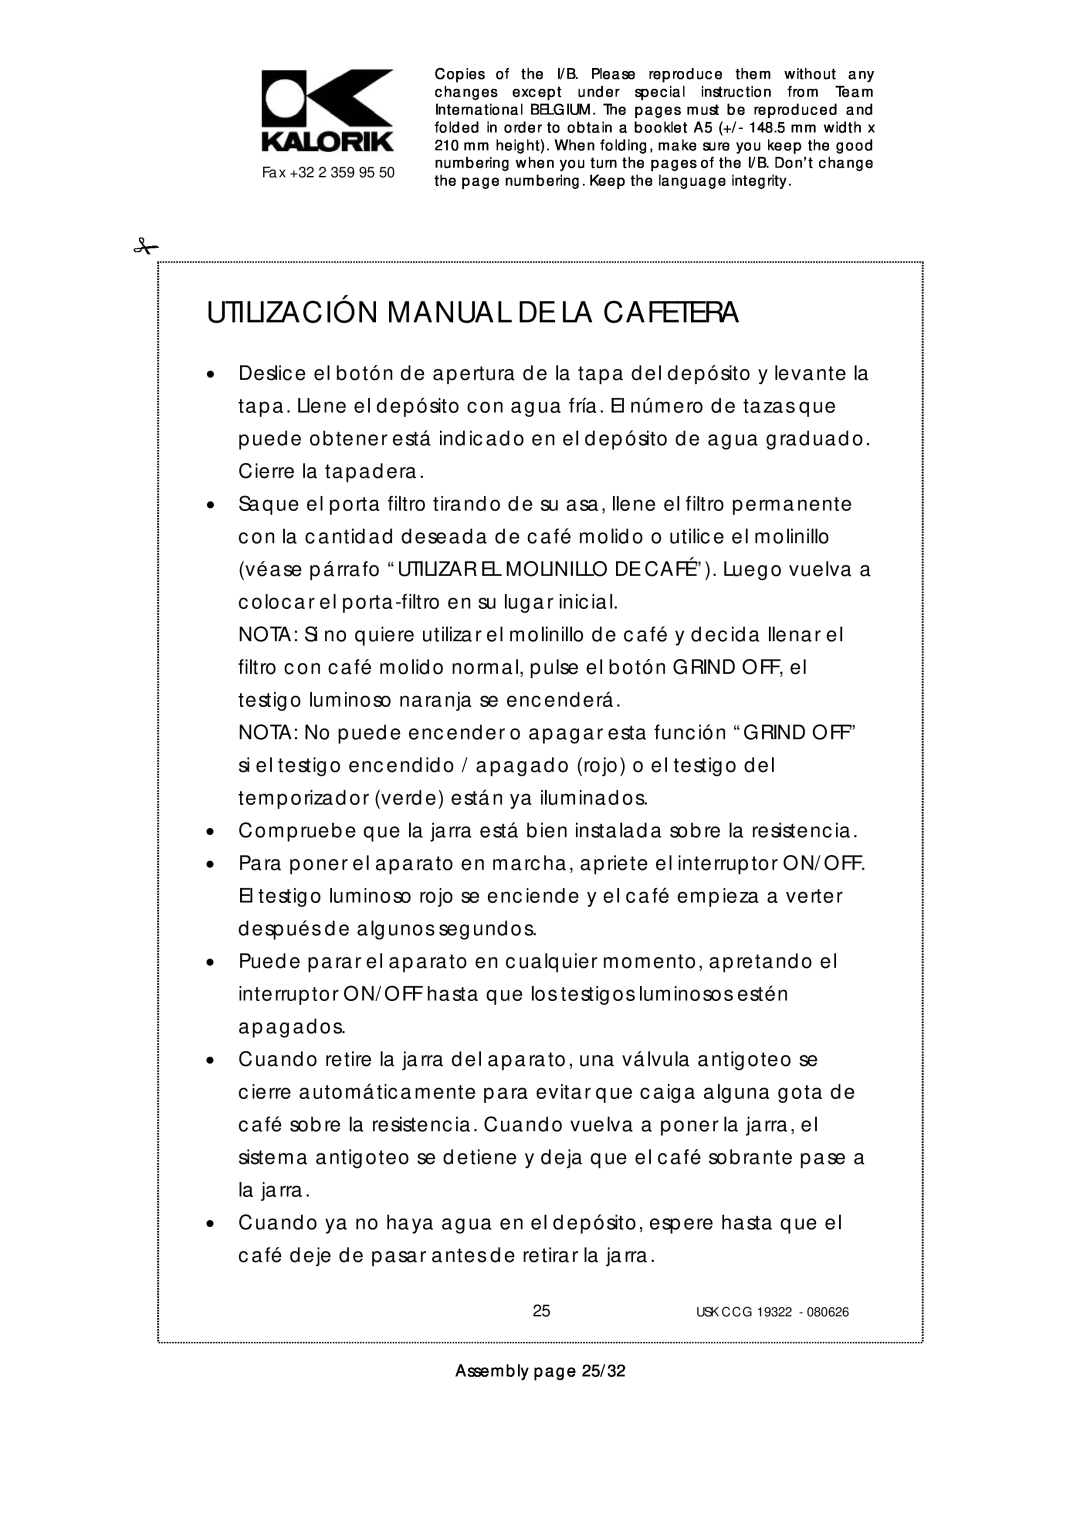 Kalorik USK CCG 19322, USK CCG080626 manual Utilización Manual De La Cafetera, Assembly page 25/32 